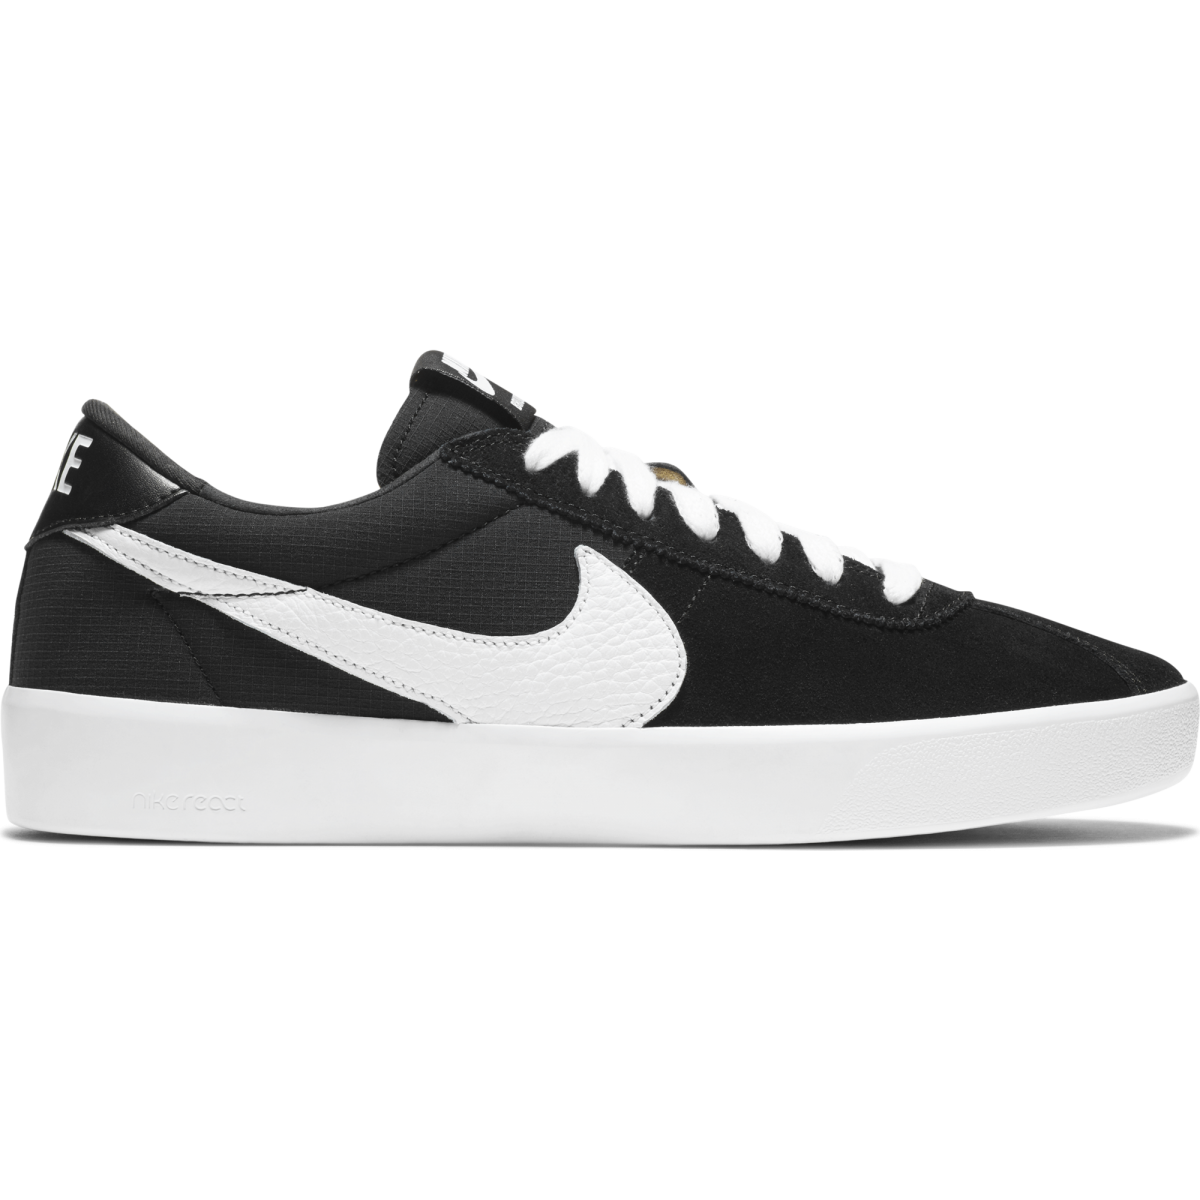 Nike SB Shoes | Precinct Skate Shop - Online Australia